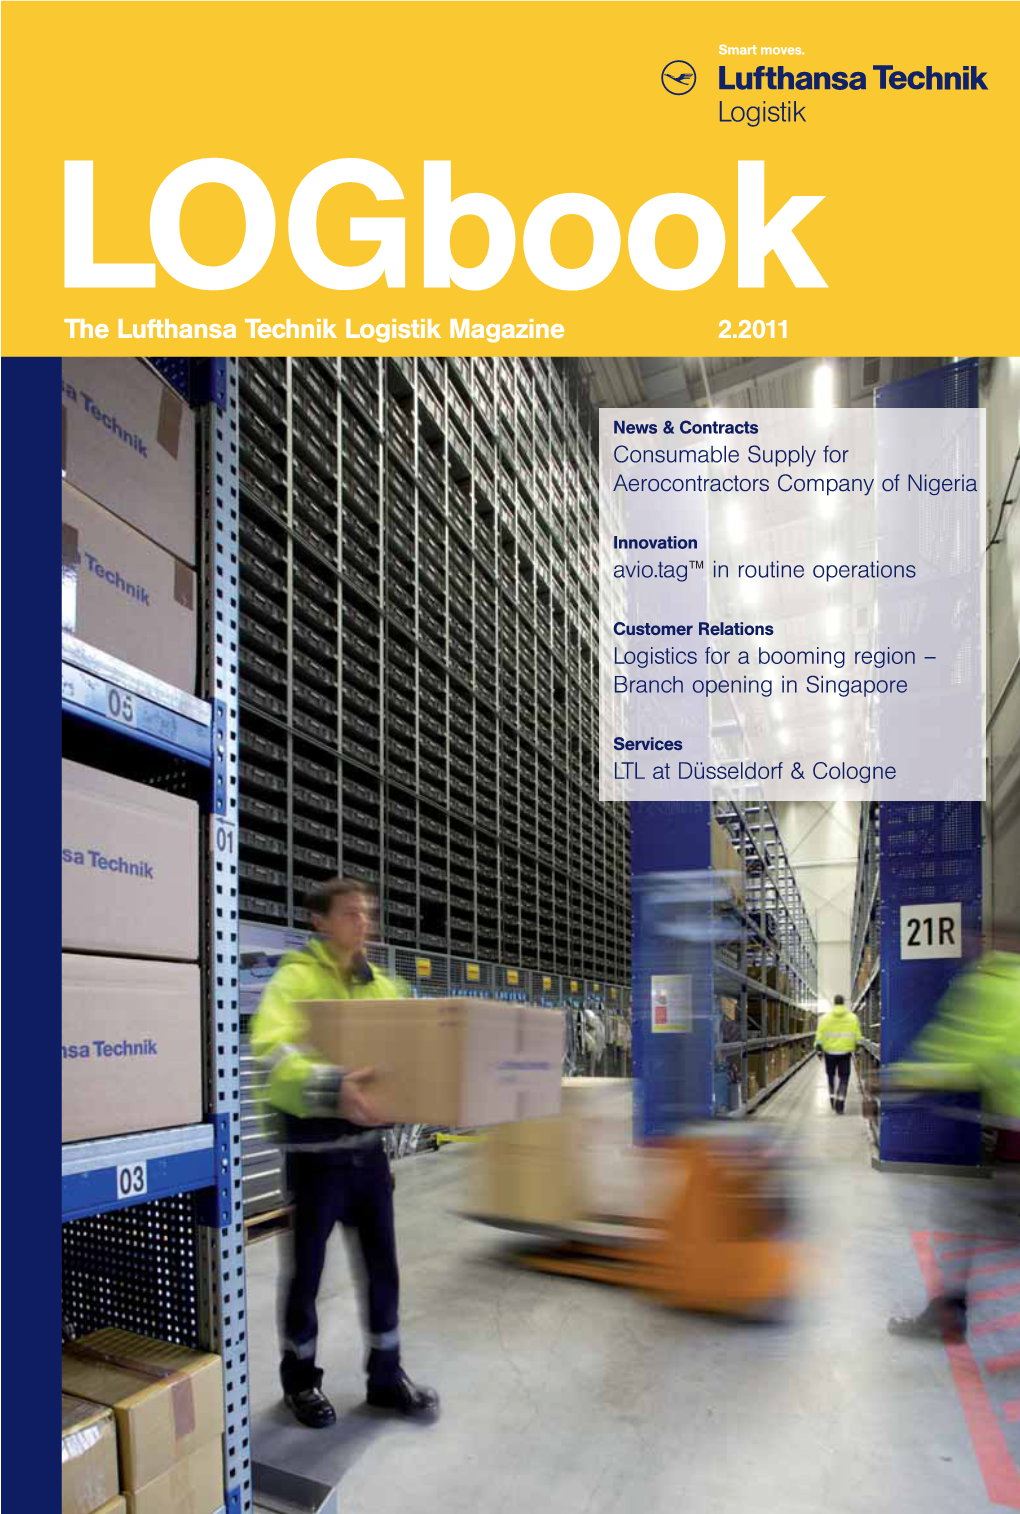 Logbook the Lufthansa Technik Logistik Magazine 2.2011